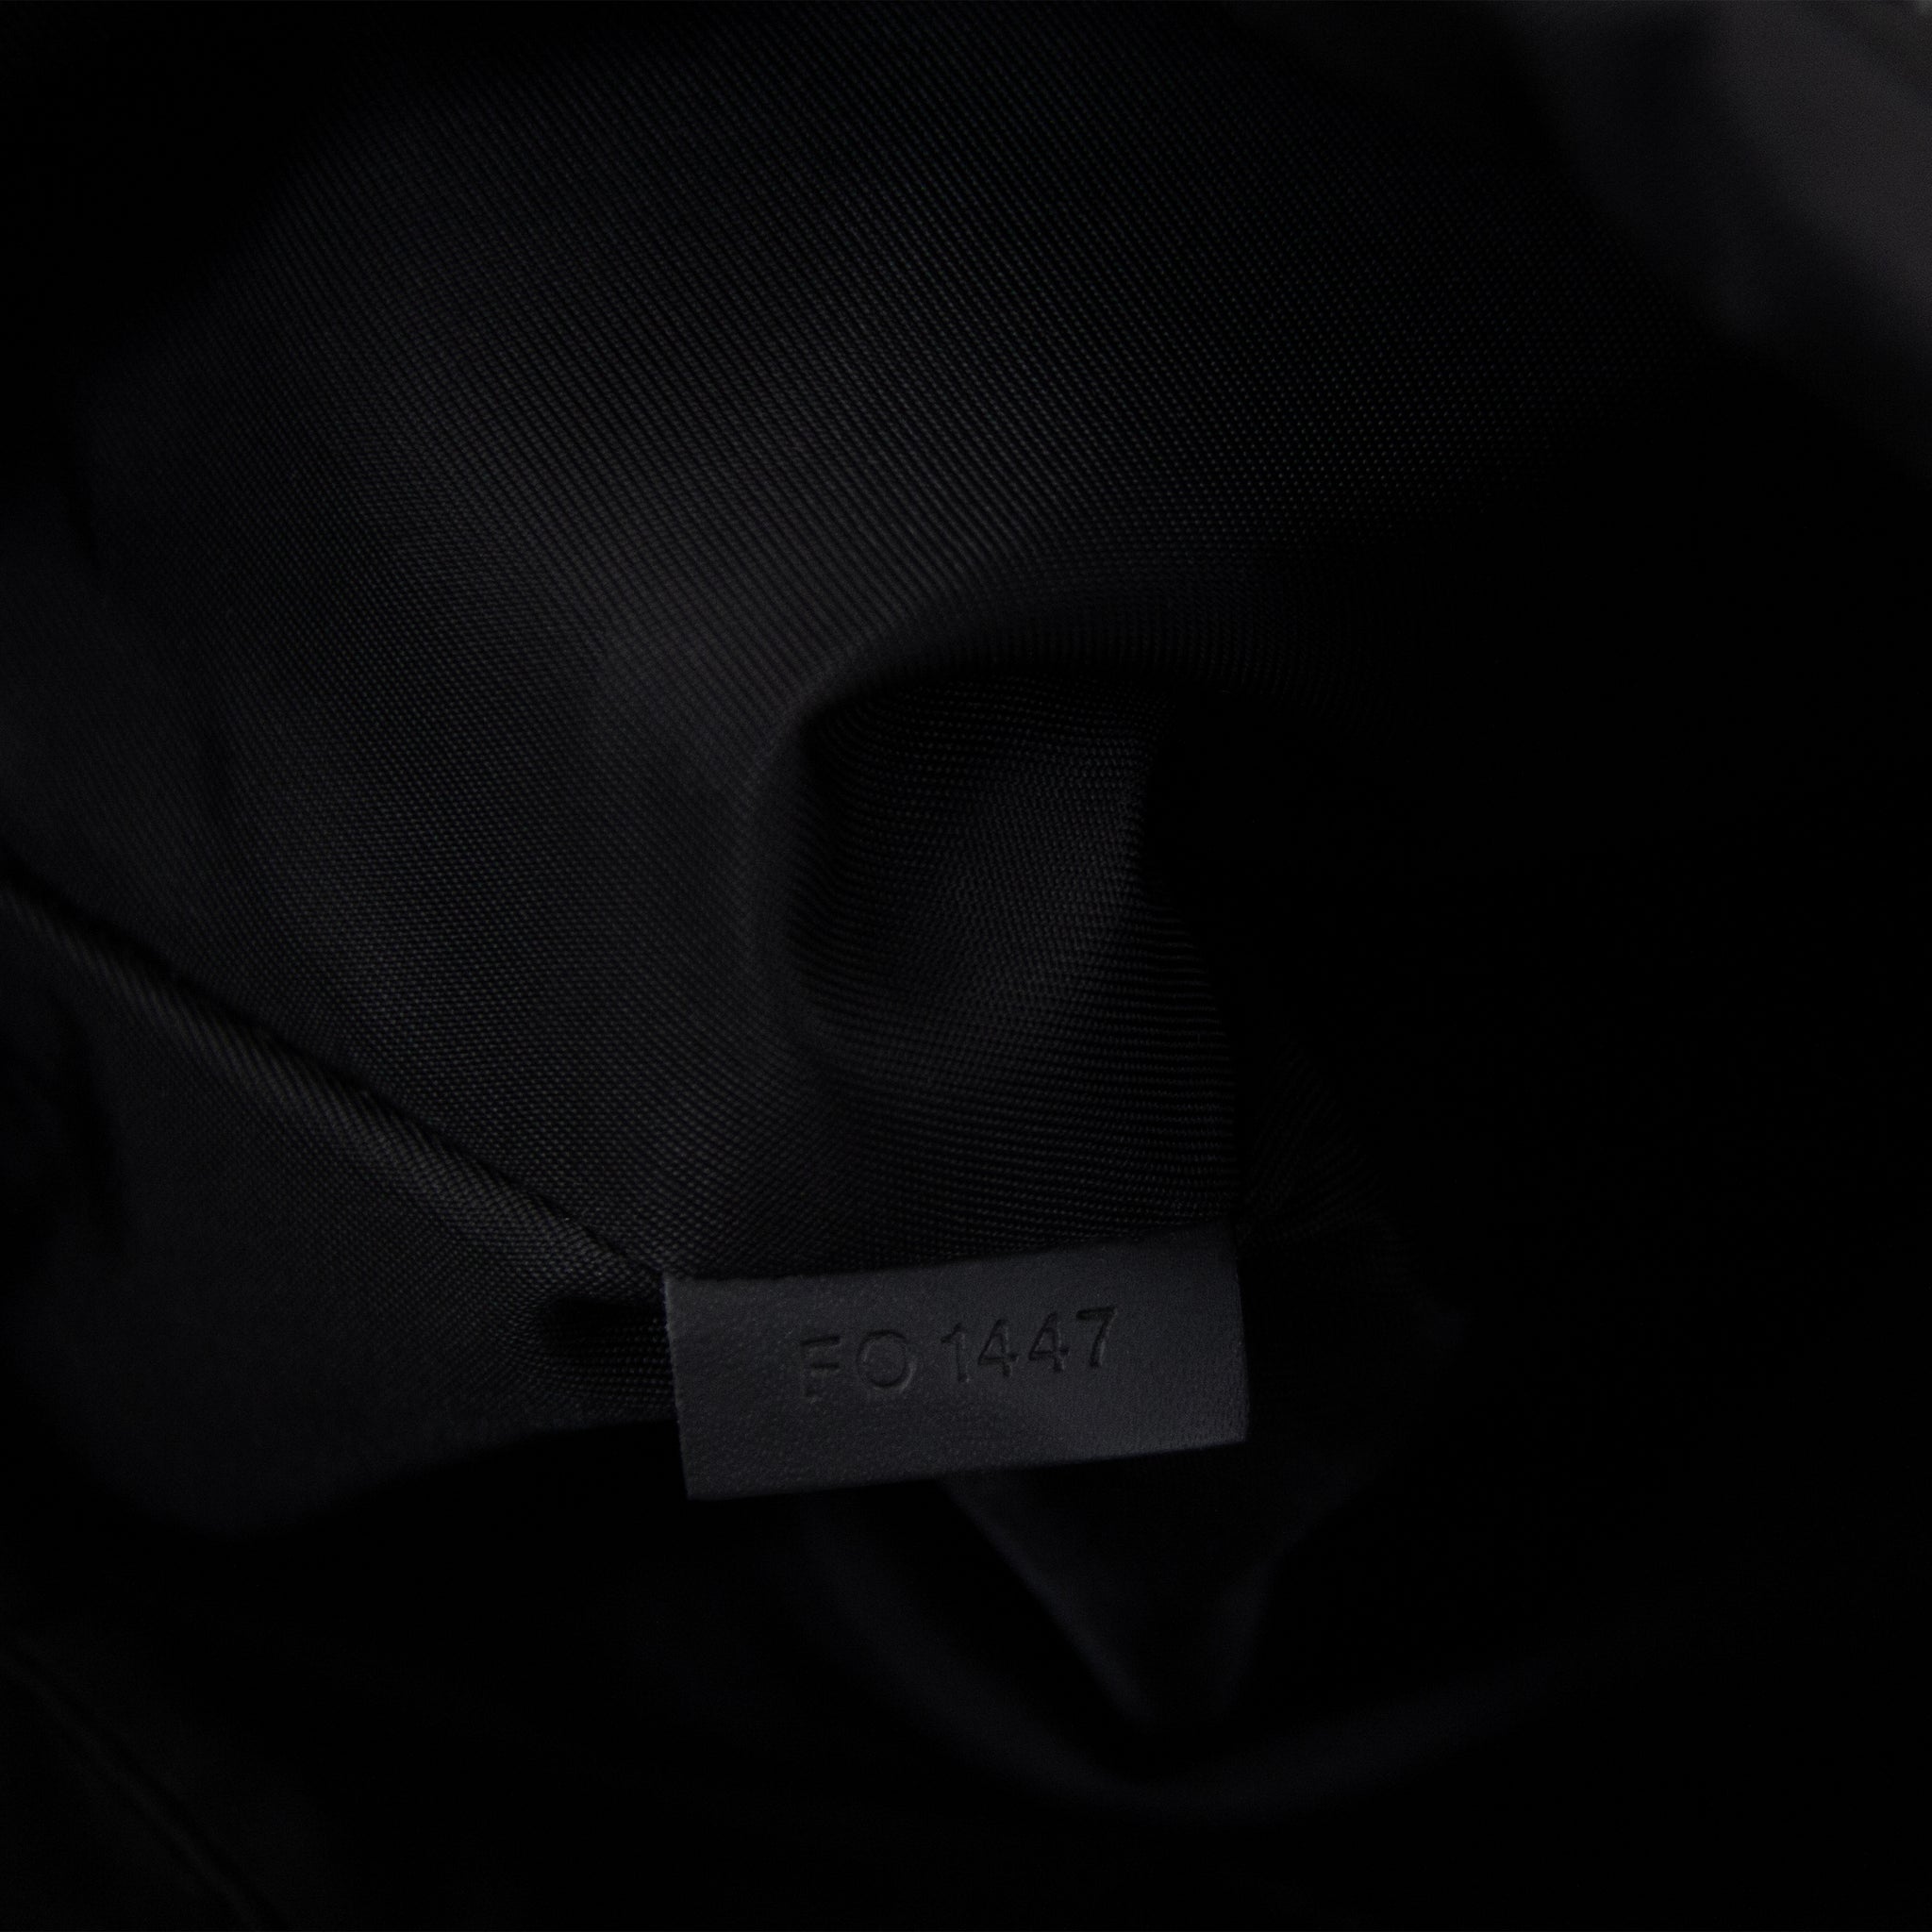 Louis Vuitton x fragment Apollo Backpack Monogram Eclipse Black - US